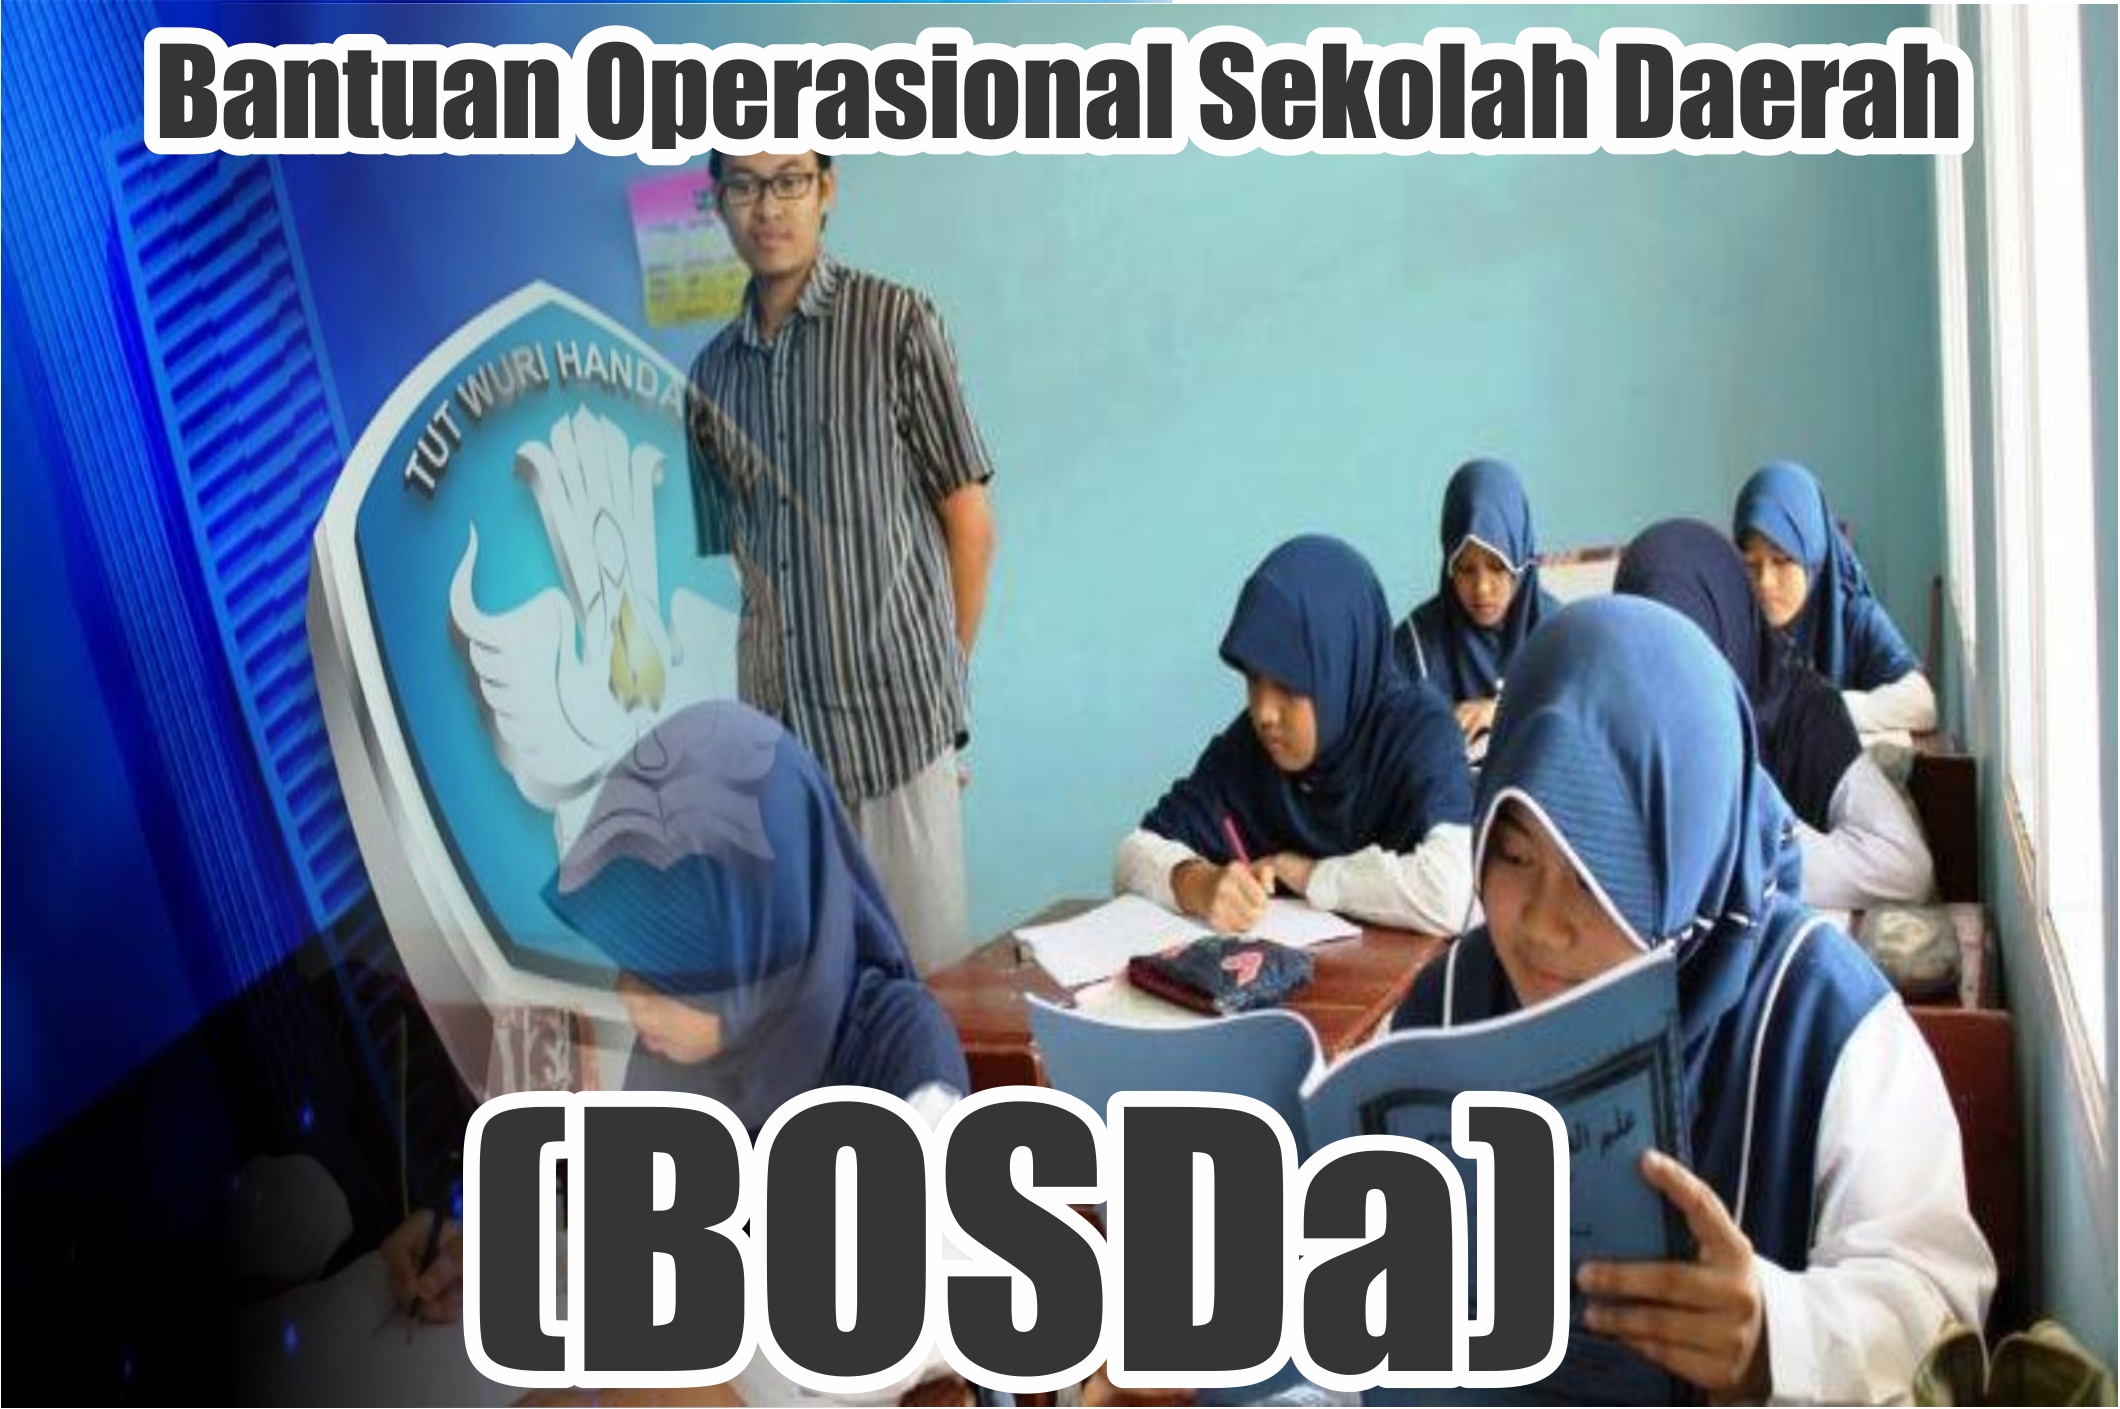 Bantuan Operasional Sekolah Daerah untuk Guru Madrasah Tetap Ada, Rp100 Ribu/Bulan